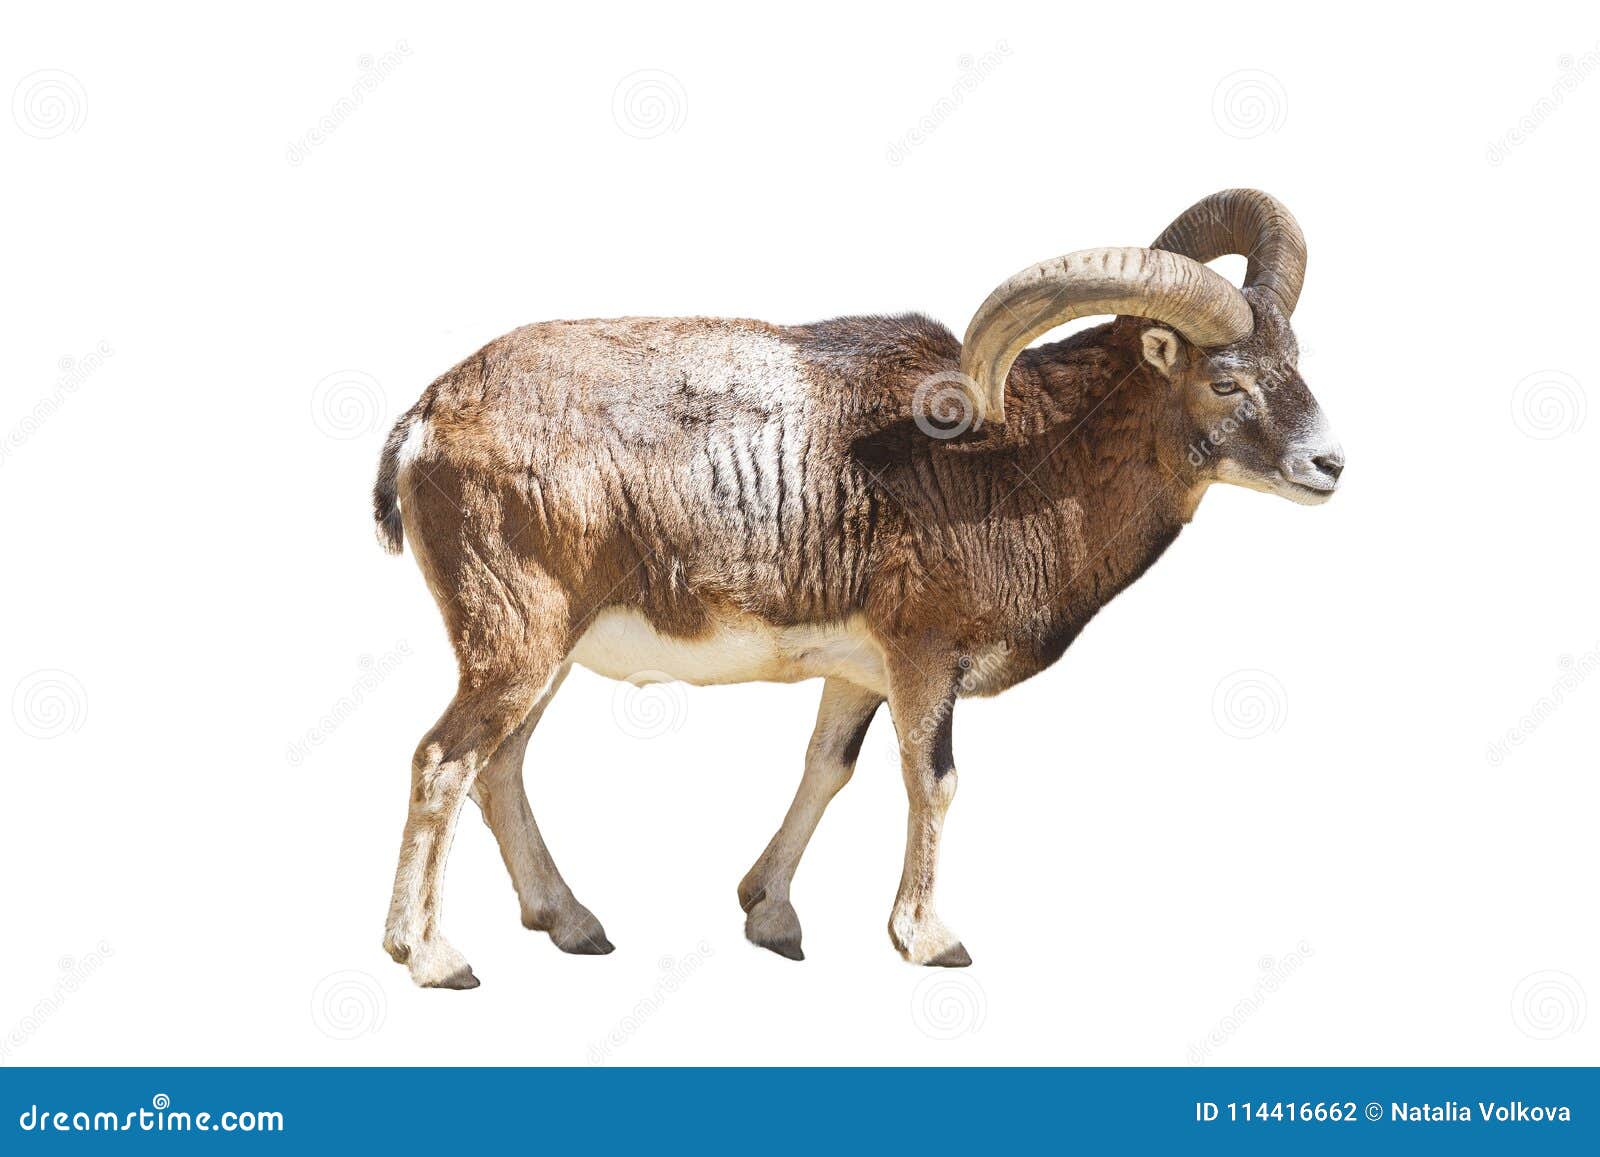 the european moufflon is a ruminant cloven-hoofed animal of the sheep genus 